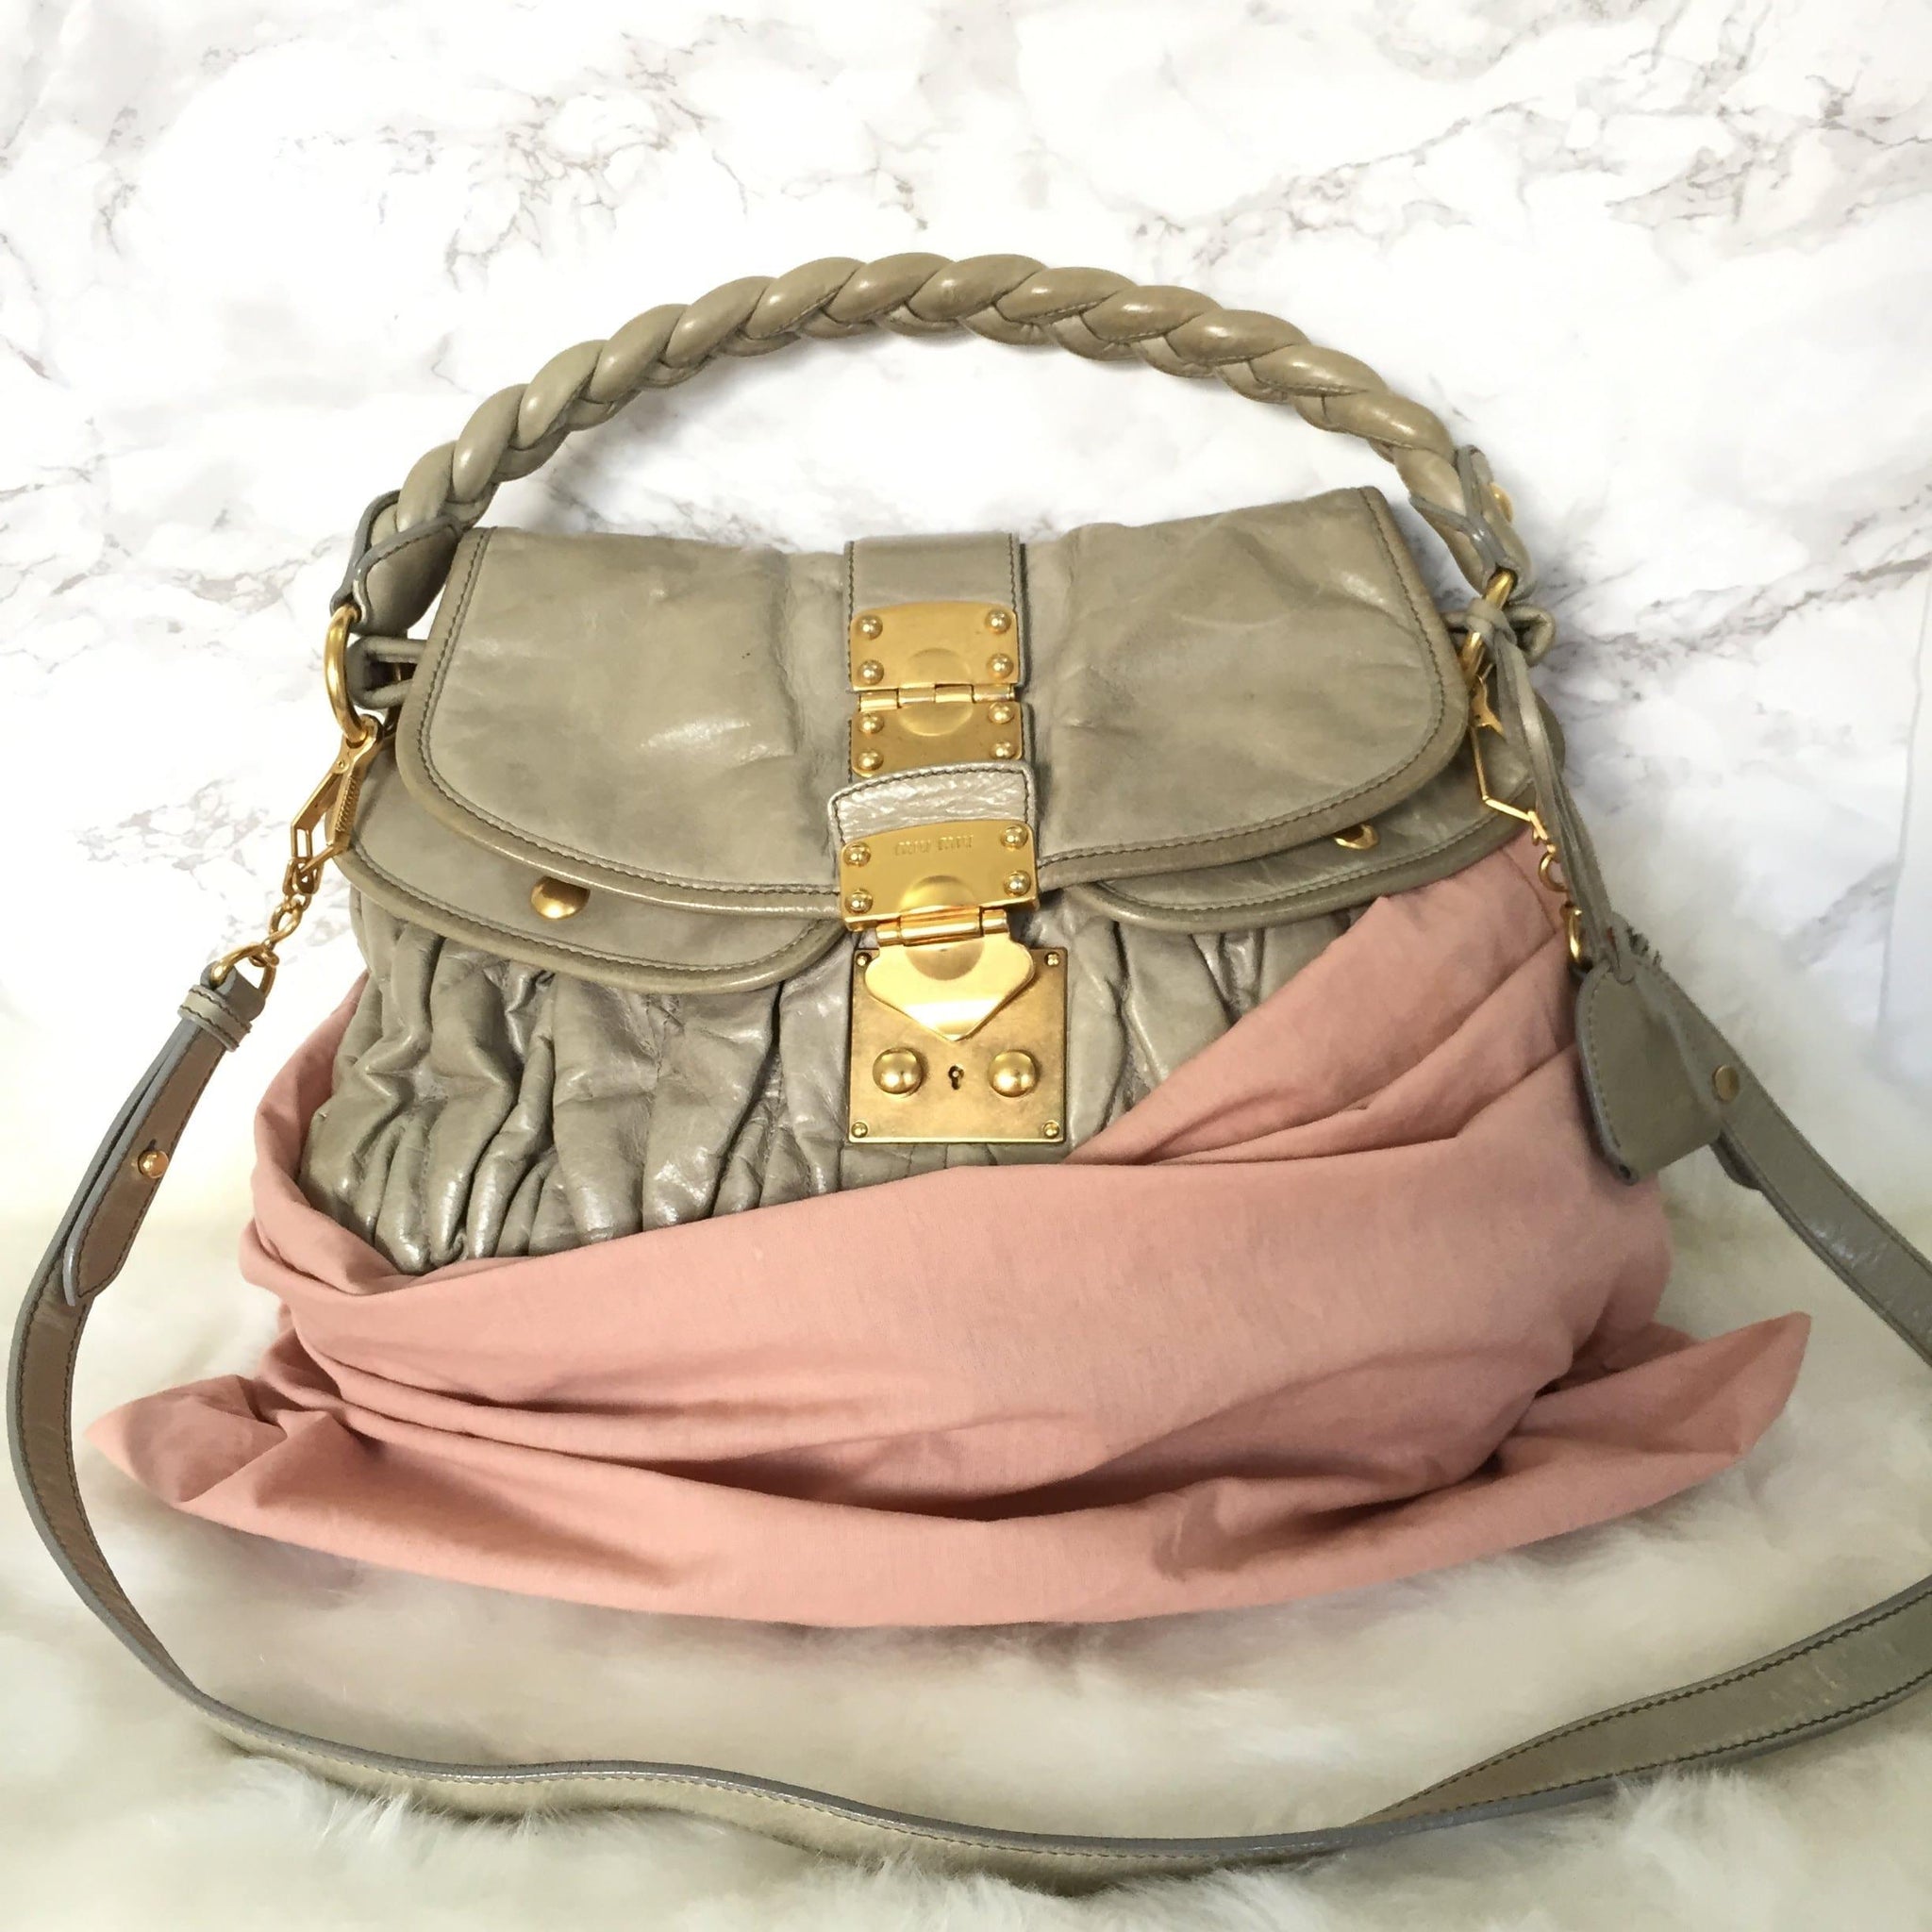 Miu Miu Authenticated Coffer Handbag